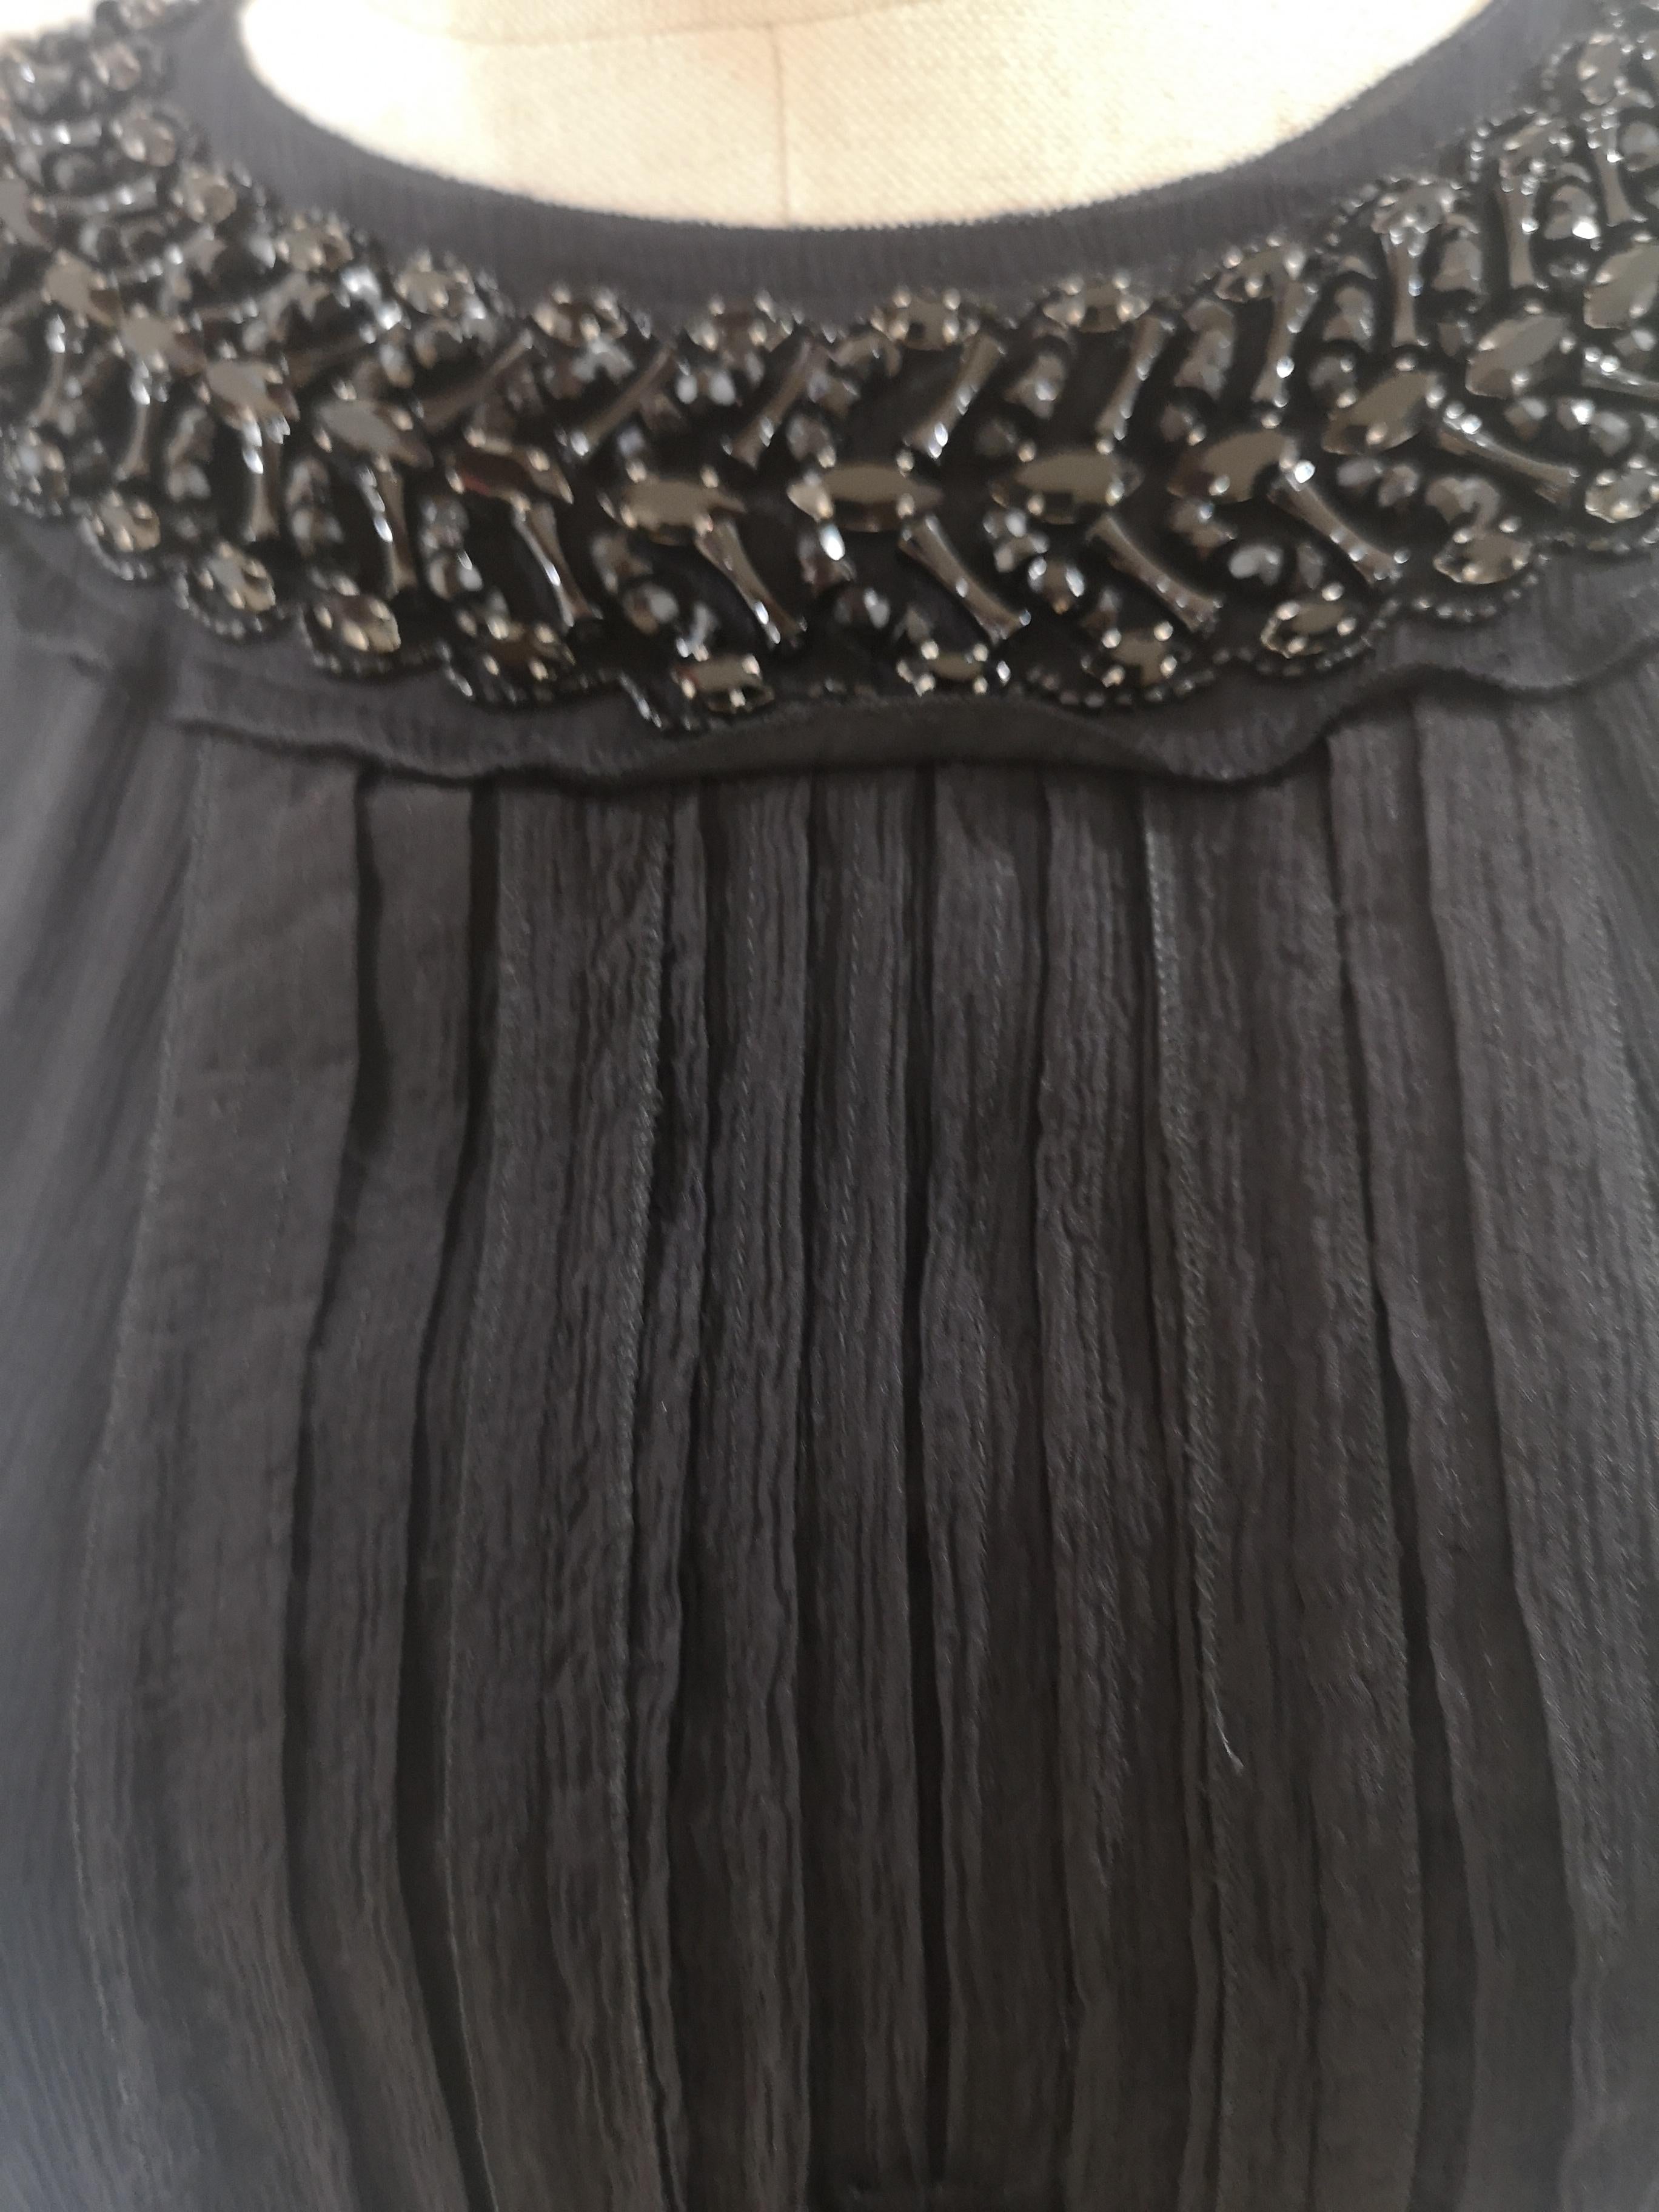 Prada Black silk with swarovsky stones Dress 8